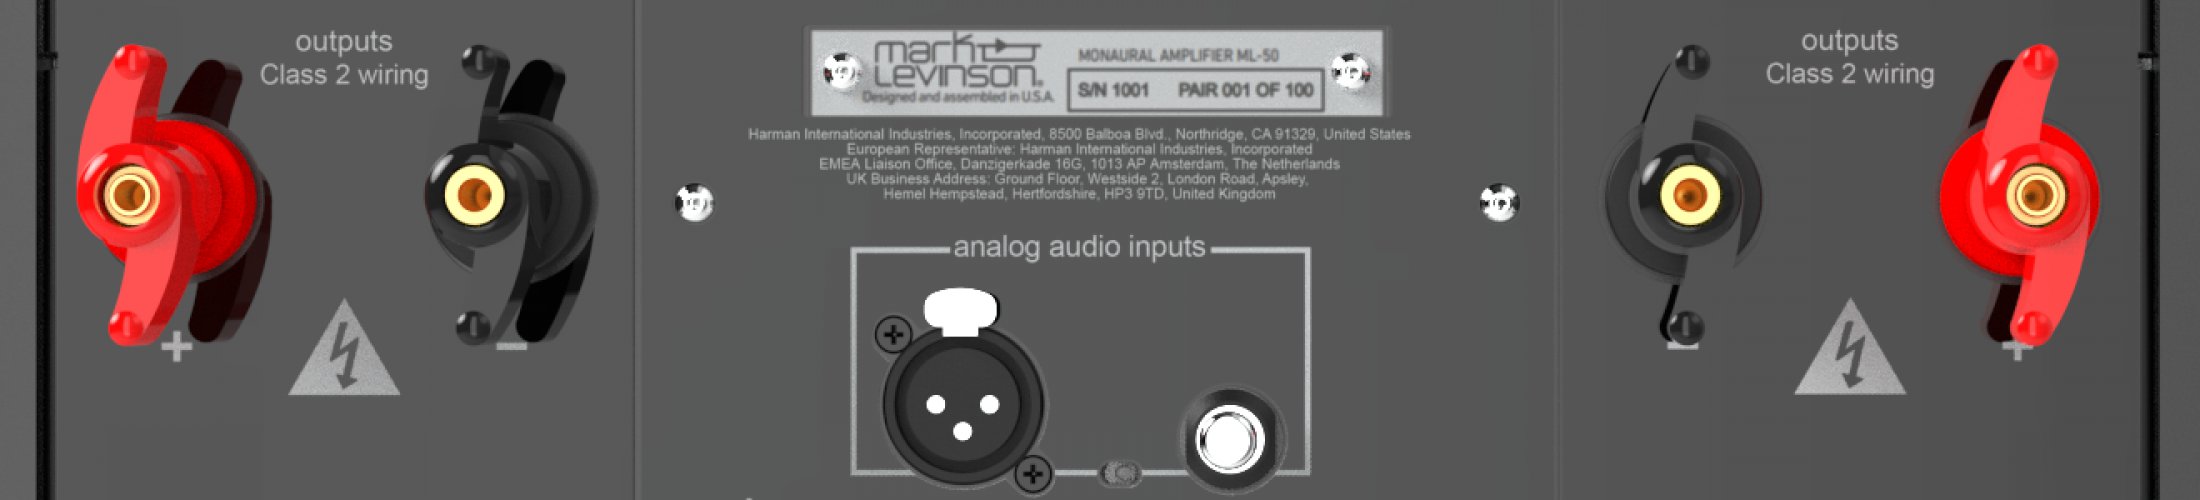 Mark Levinson ML-50 #1